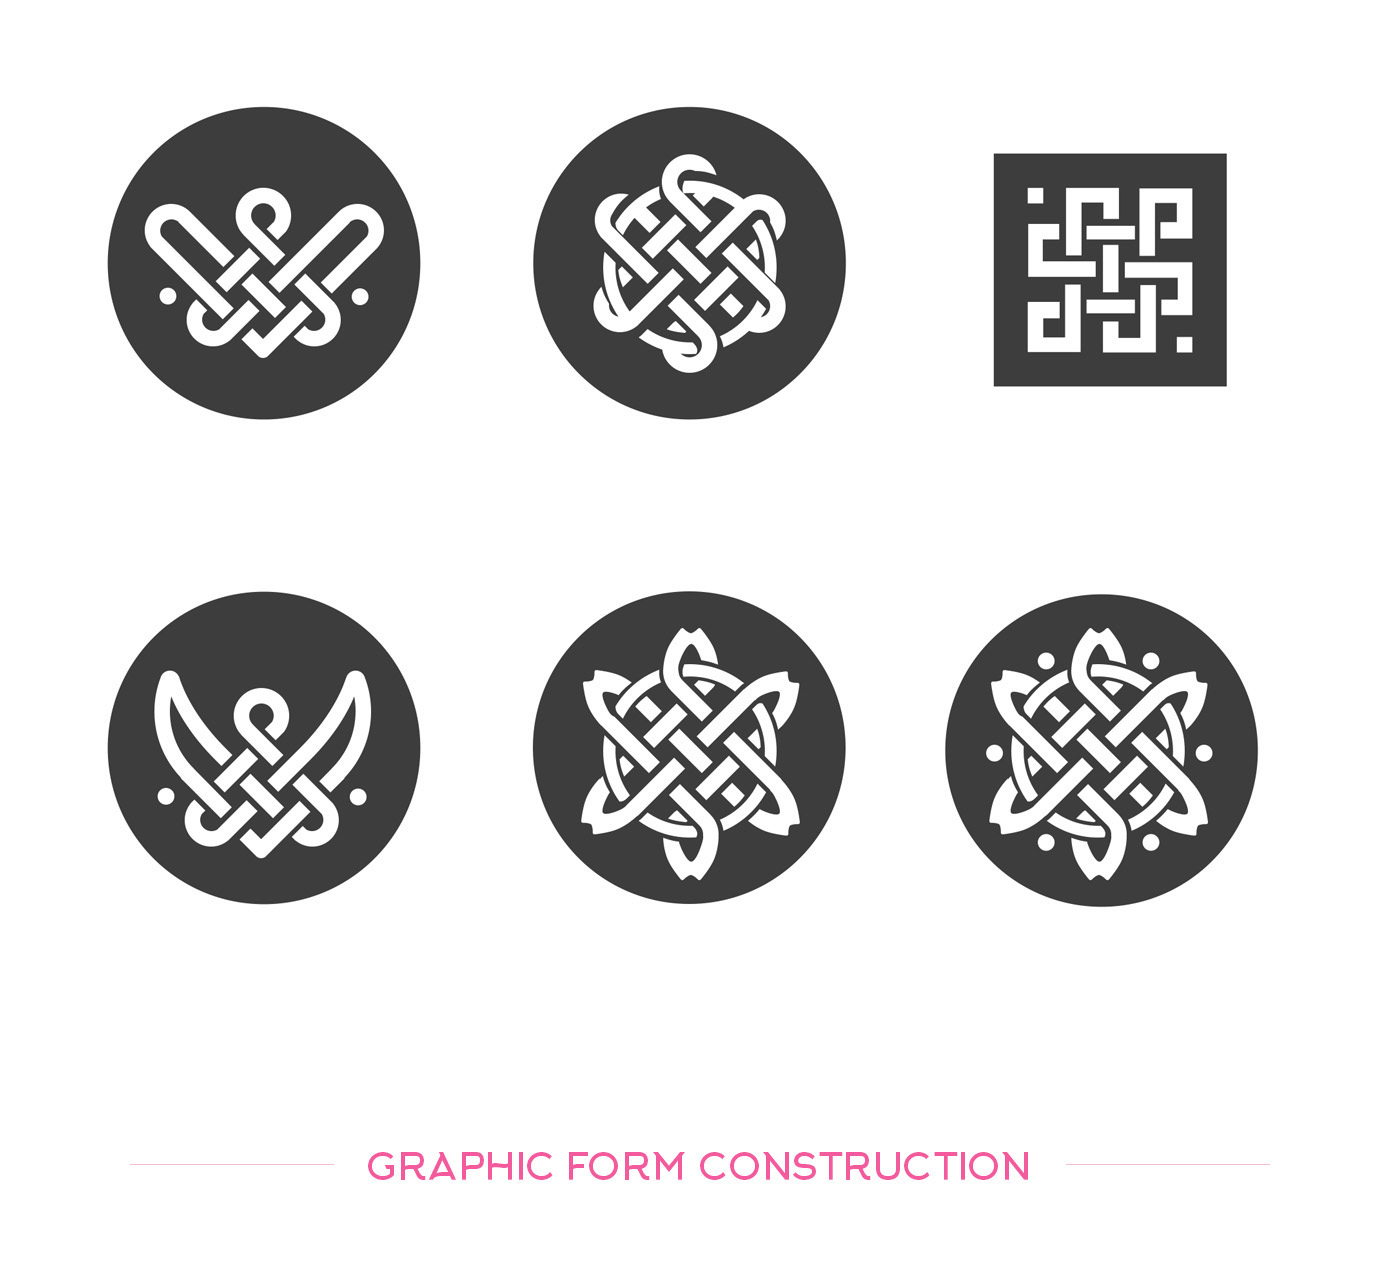 logo Logotype proart SaQure prokopenko   branding  Branding Identity identity process inspire